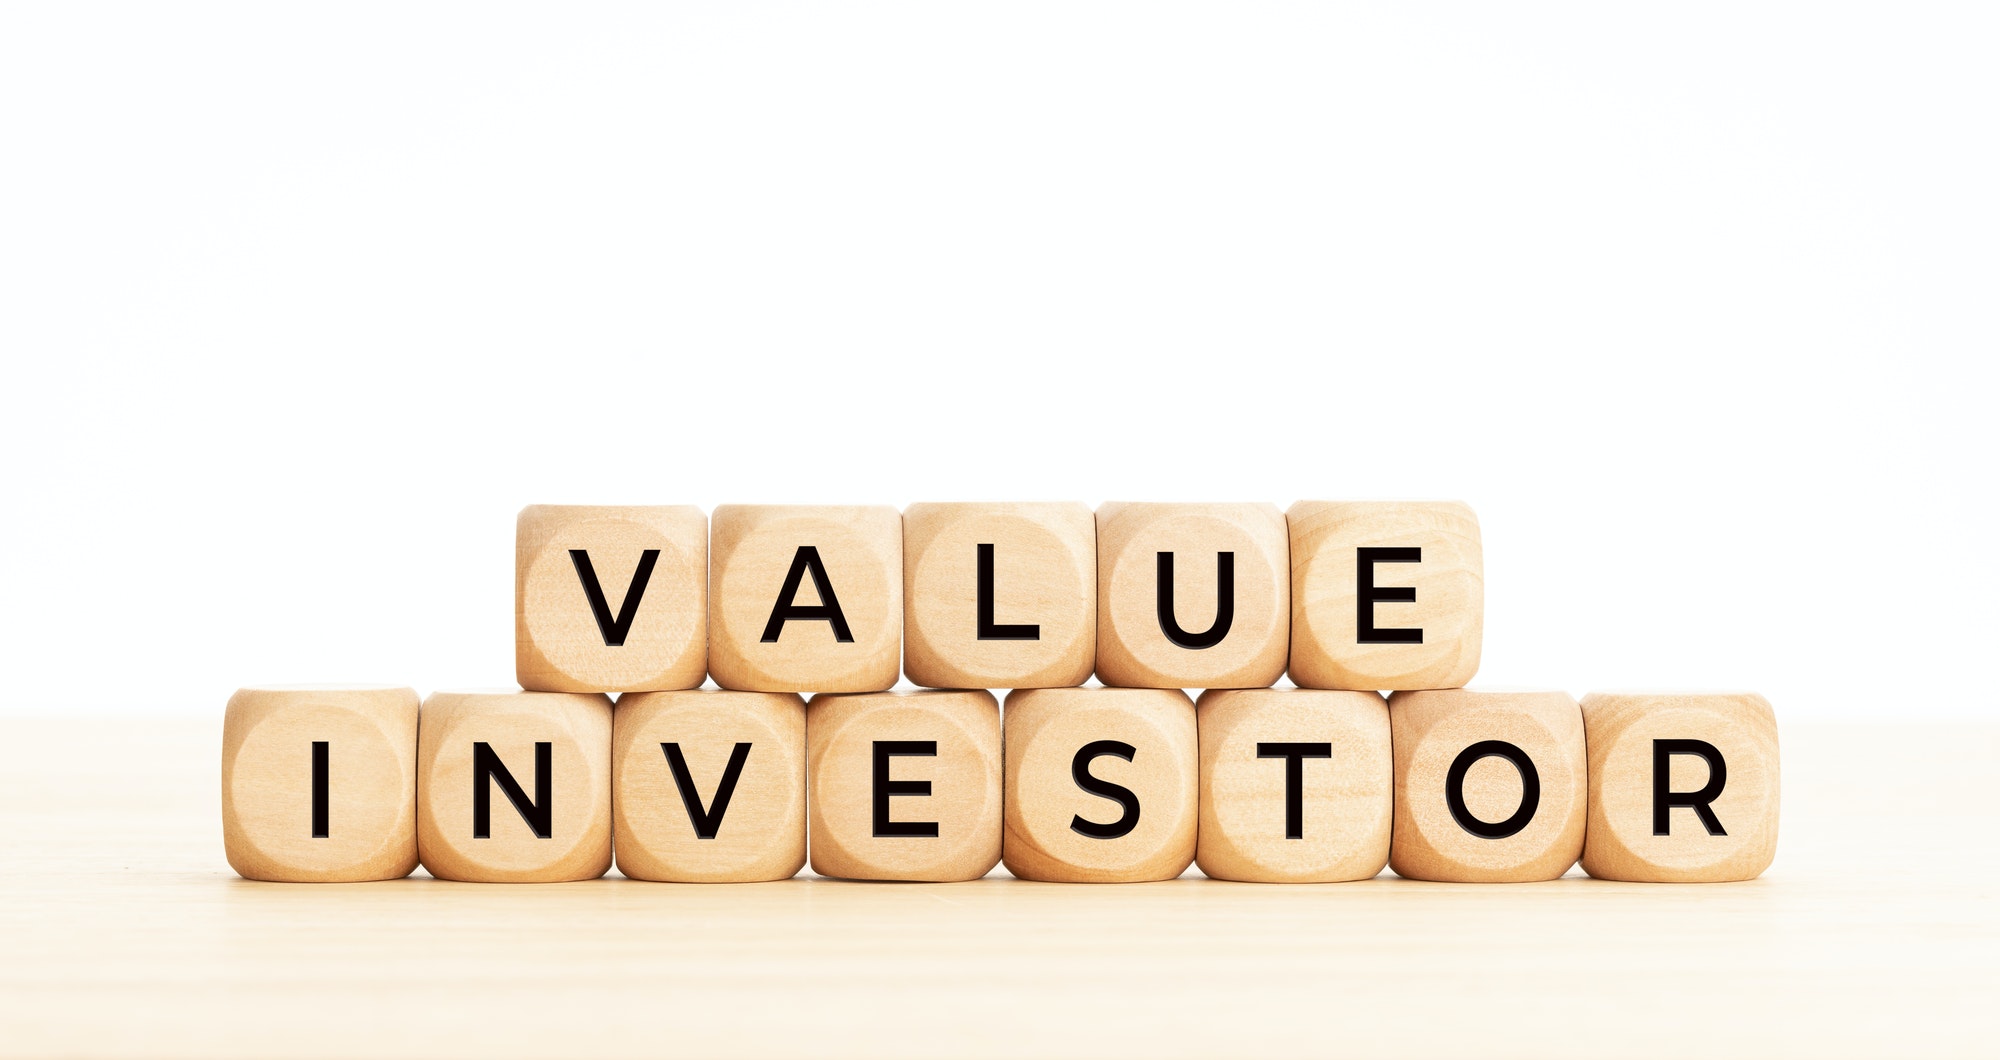 Value investor phrase on wooden block shape